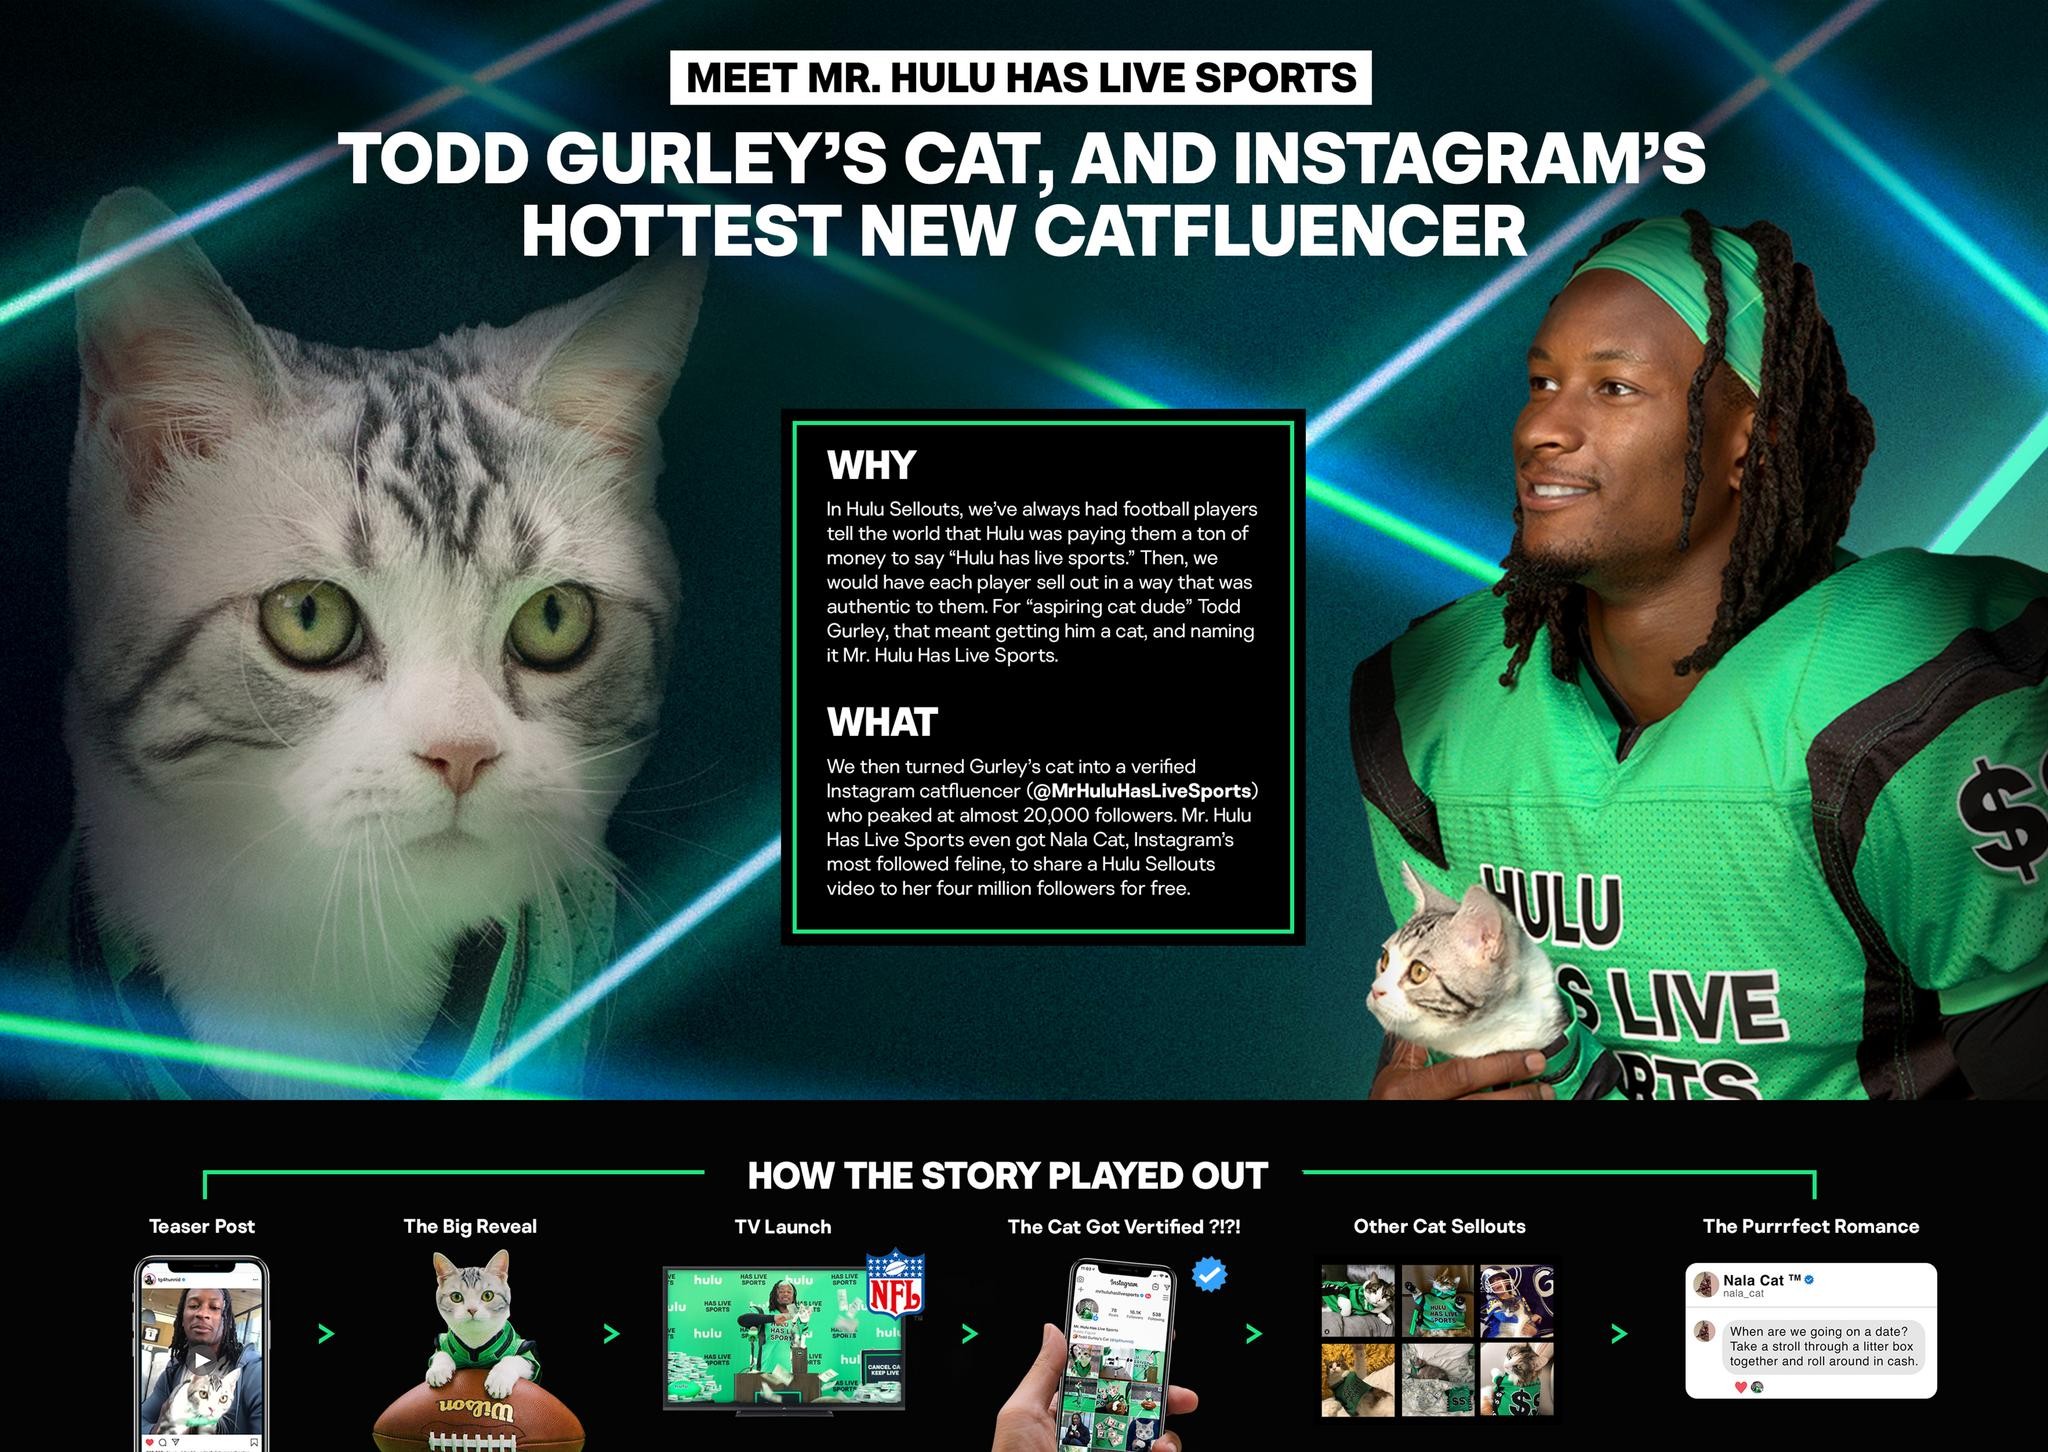 Todd Gurley’s Catfluencer Mr. Hulu Has Live Sports